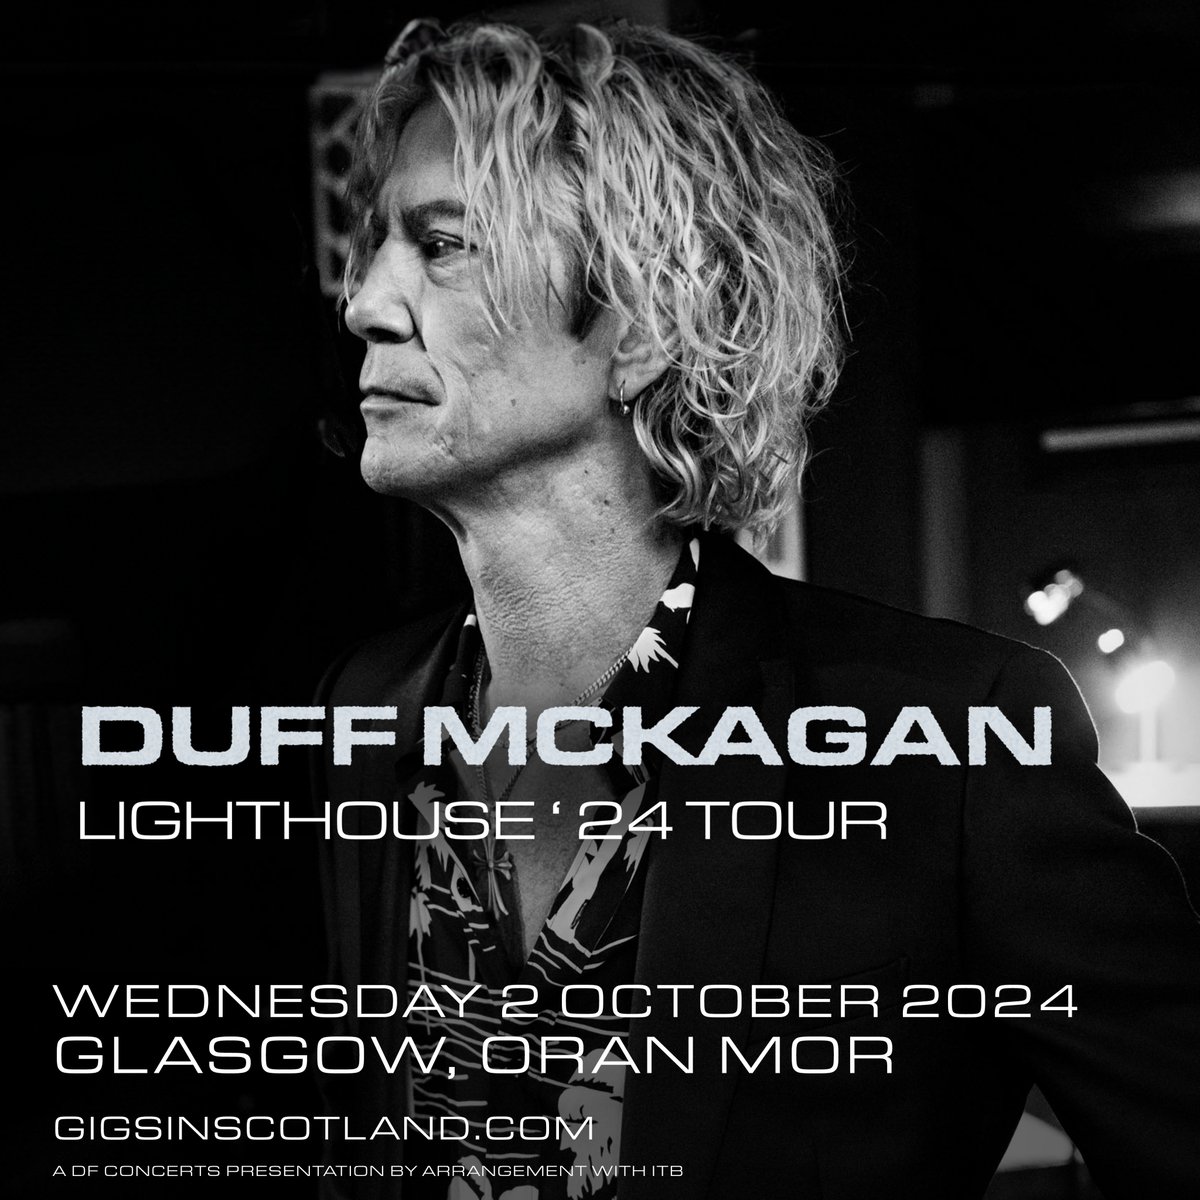 JUST ANNOUNCED // @DuffMcKagan Lighthouse '24 Tour Wednesday 2nd October Tickets on sale 9am Friday from @gigsinscotland >> tinyurl.com/4fb7bcer